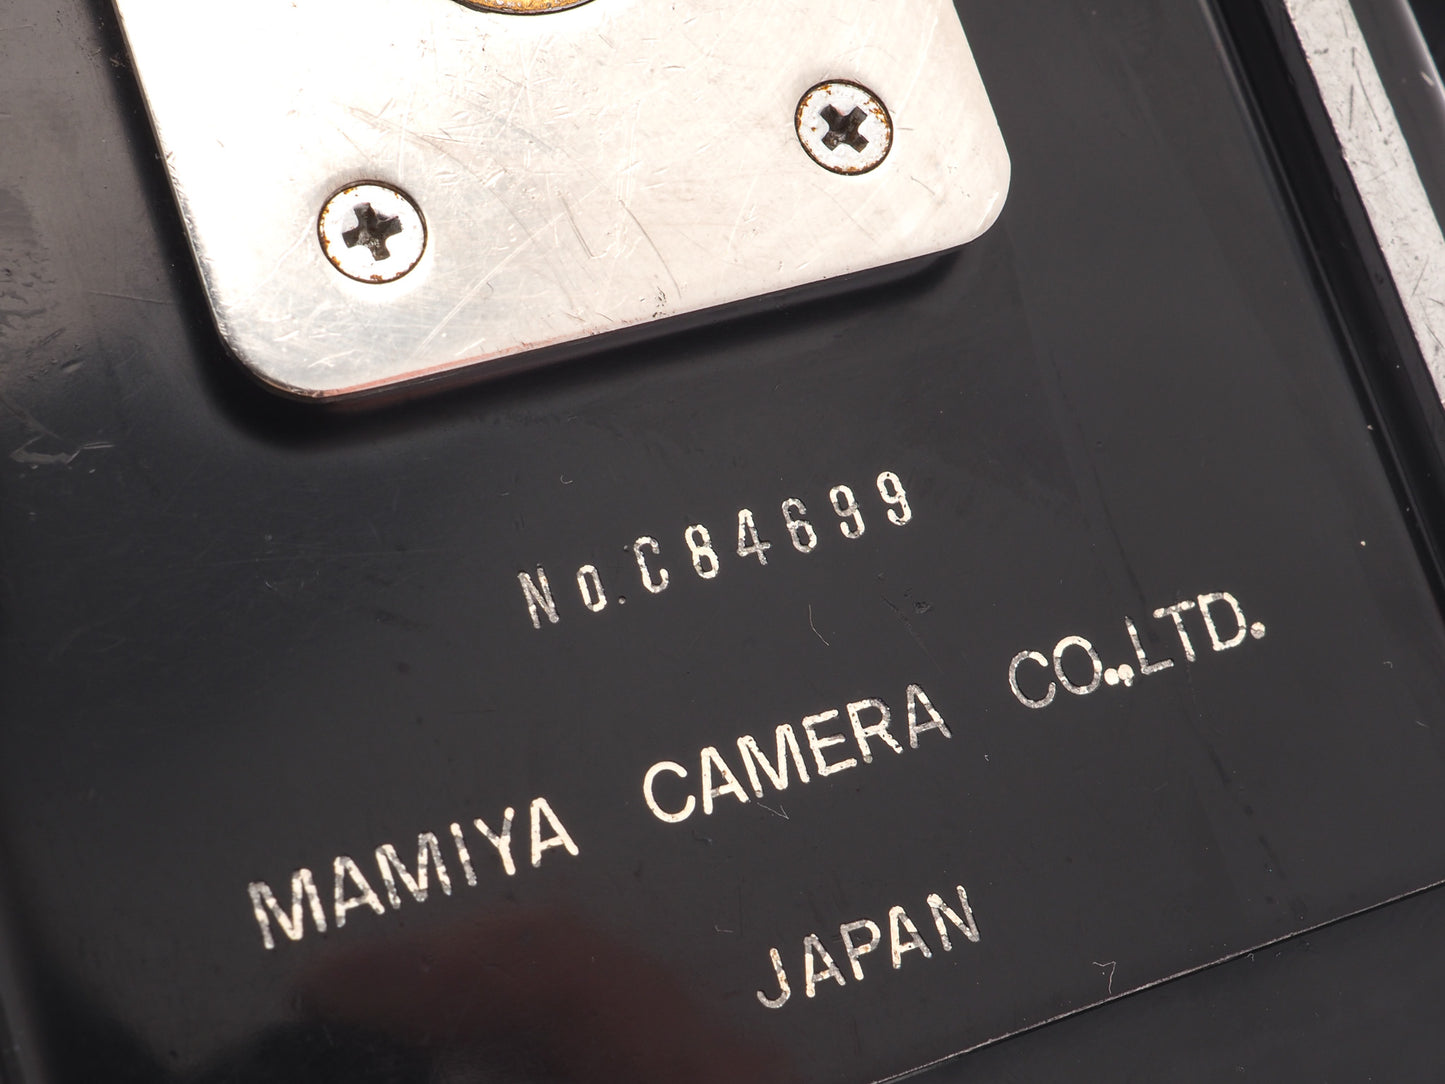 Mamiya RB67 Professional + 120 Professional 6x7 Film Back + 90mm f3.8 Mamiya-Sekor + Waist Level Finder